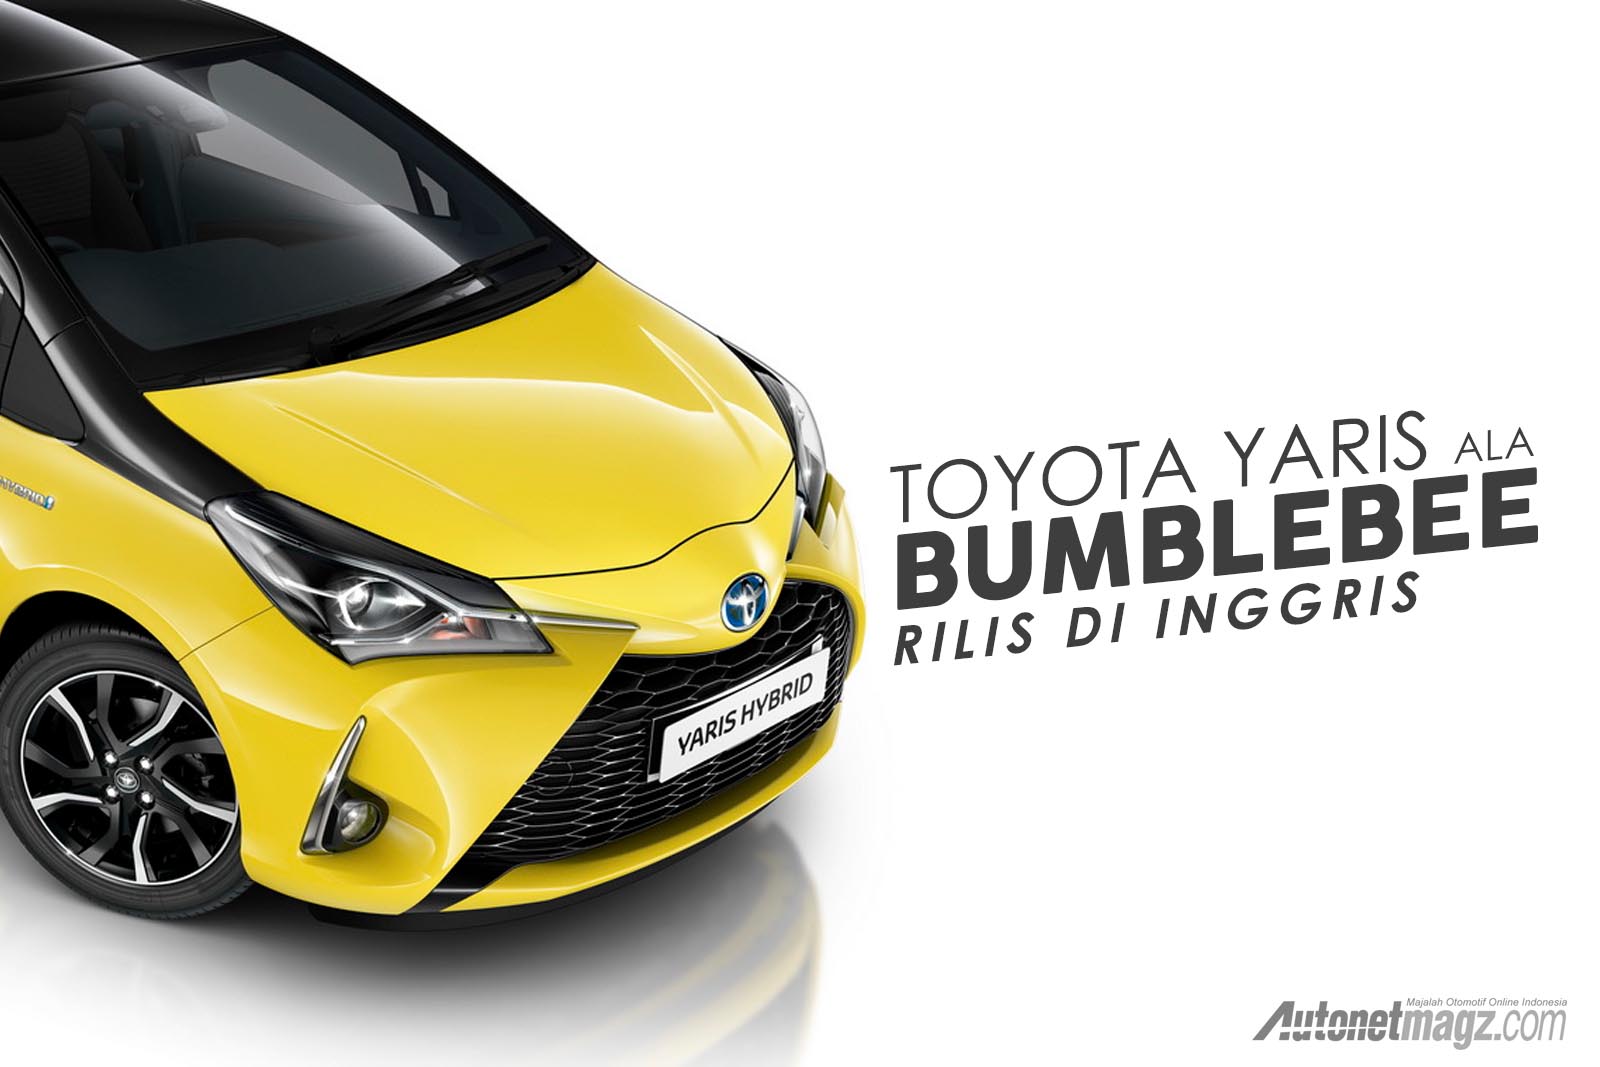 Toyota Yaris Berkelir Bumblebee Dirilis Di Inggris - Autonetmagz